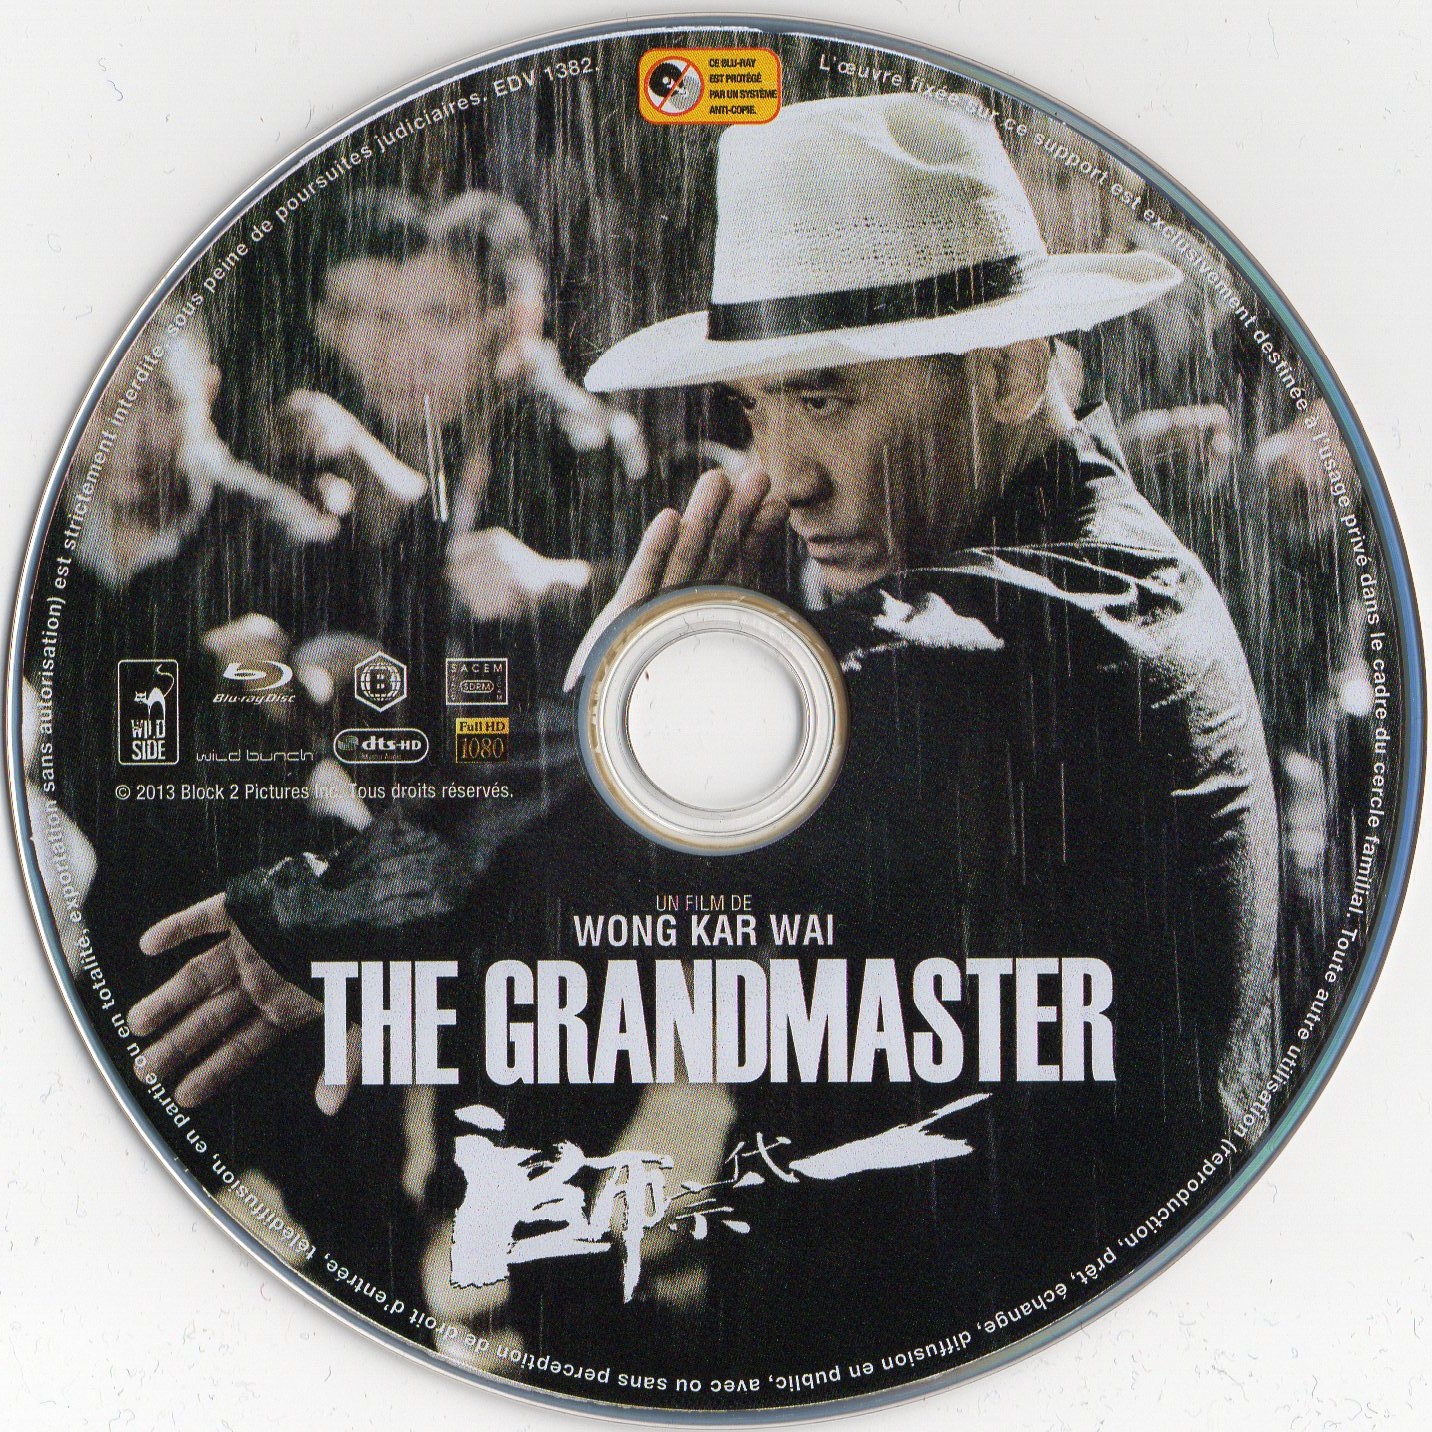 The grandmaster v2